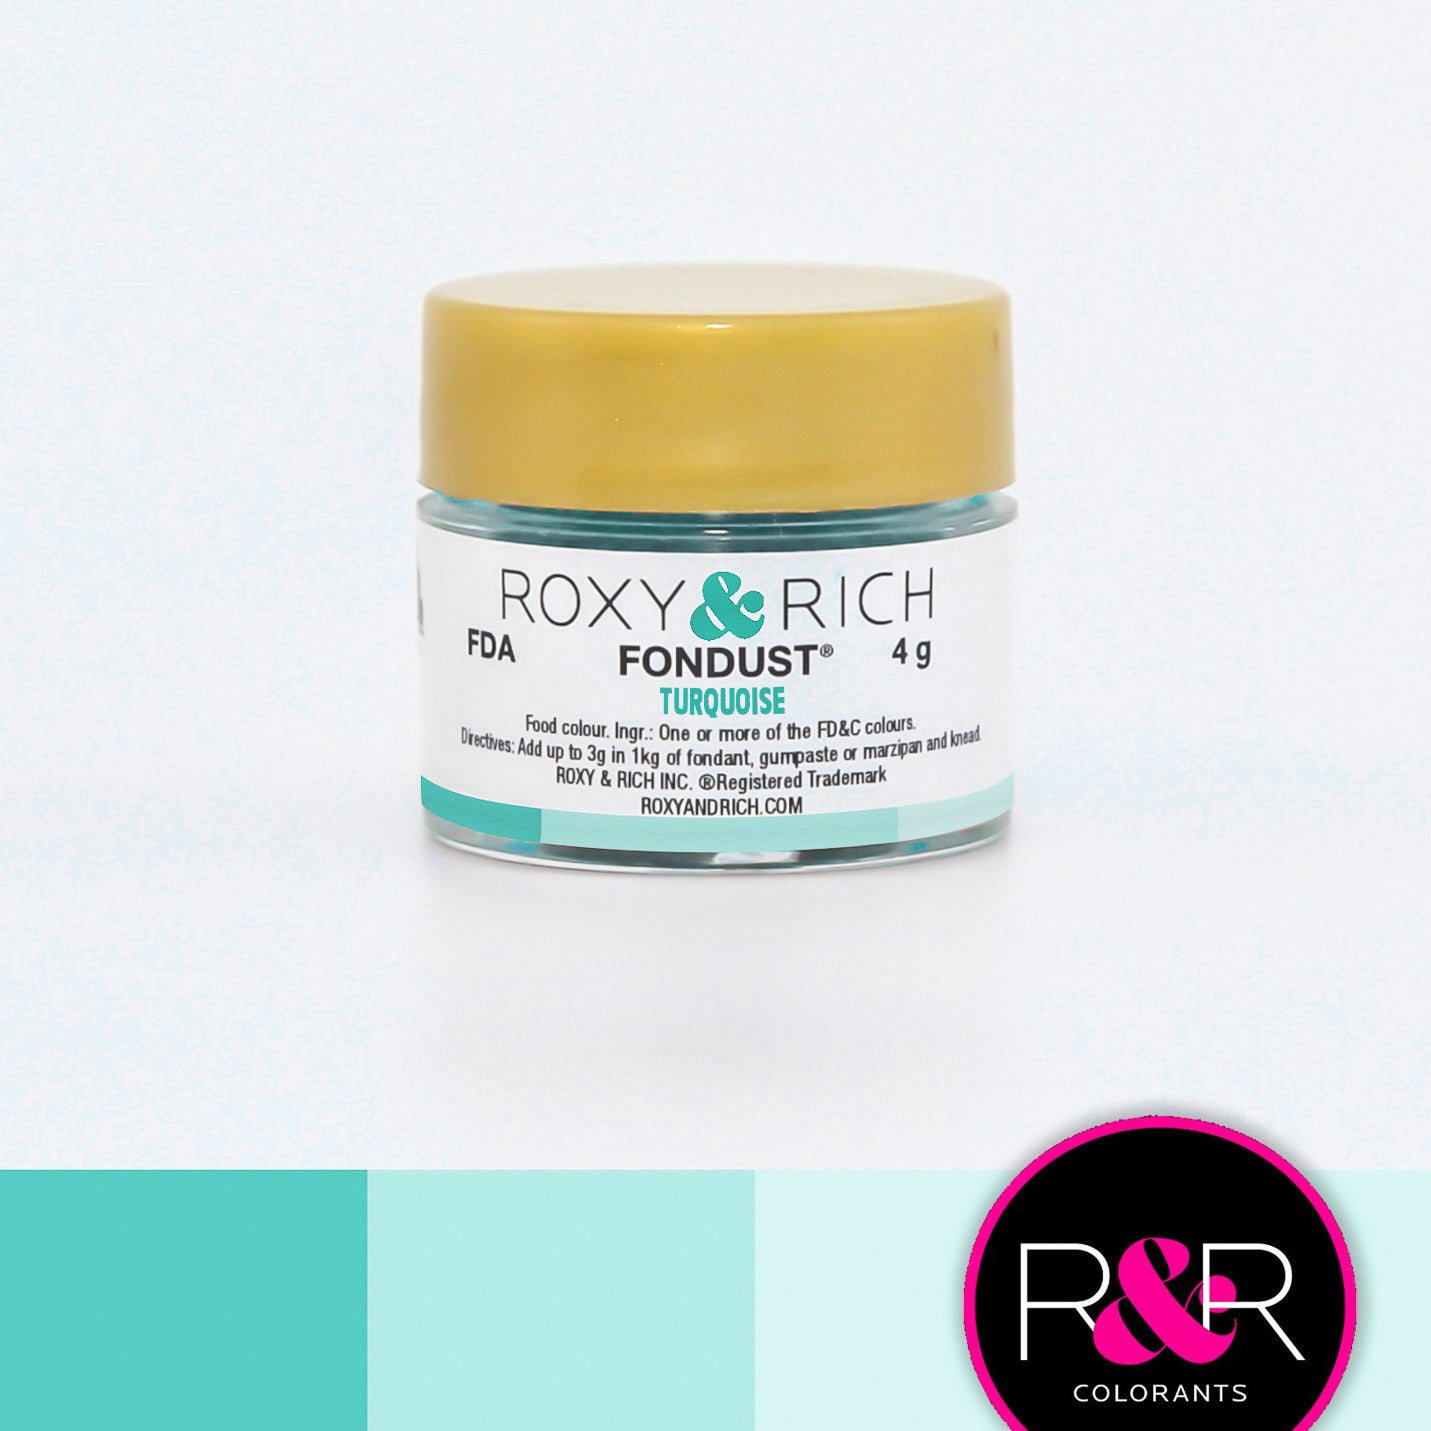 Colorant FONDUST Turquoise 4g   - Roxy & Rich - Colorant alimentaire hydrosoluble - F4-031